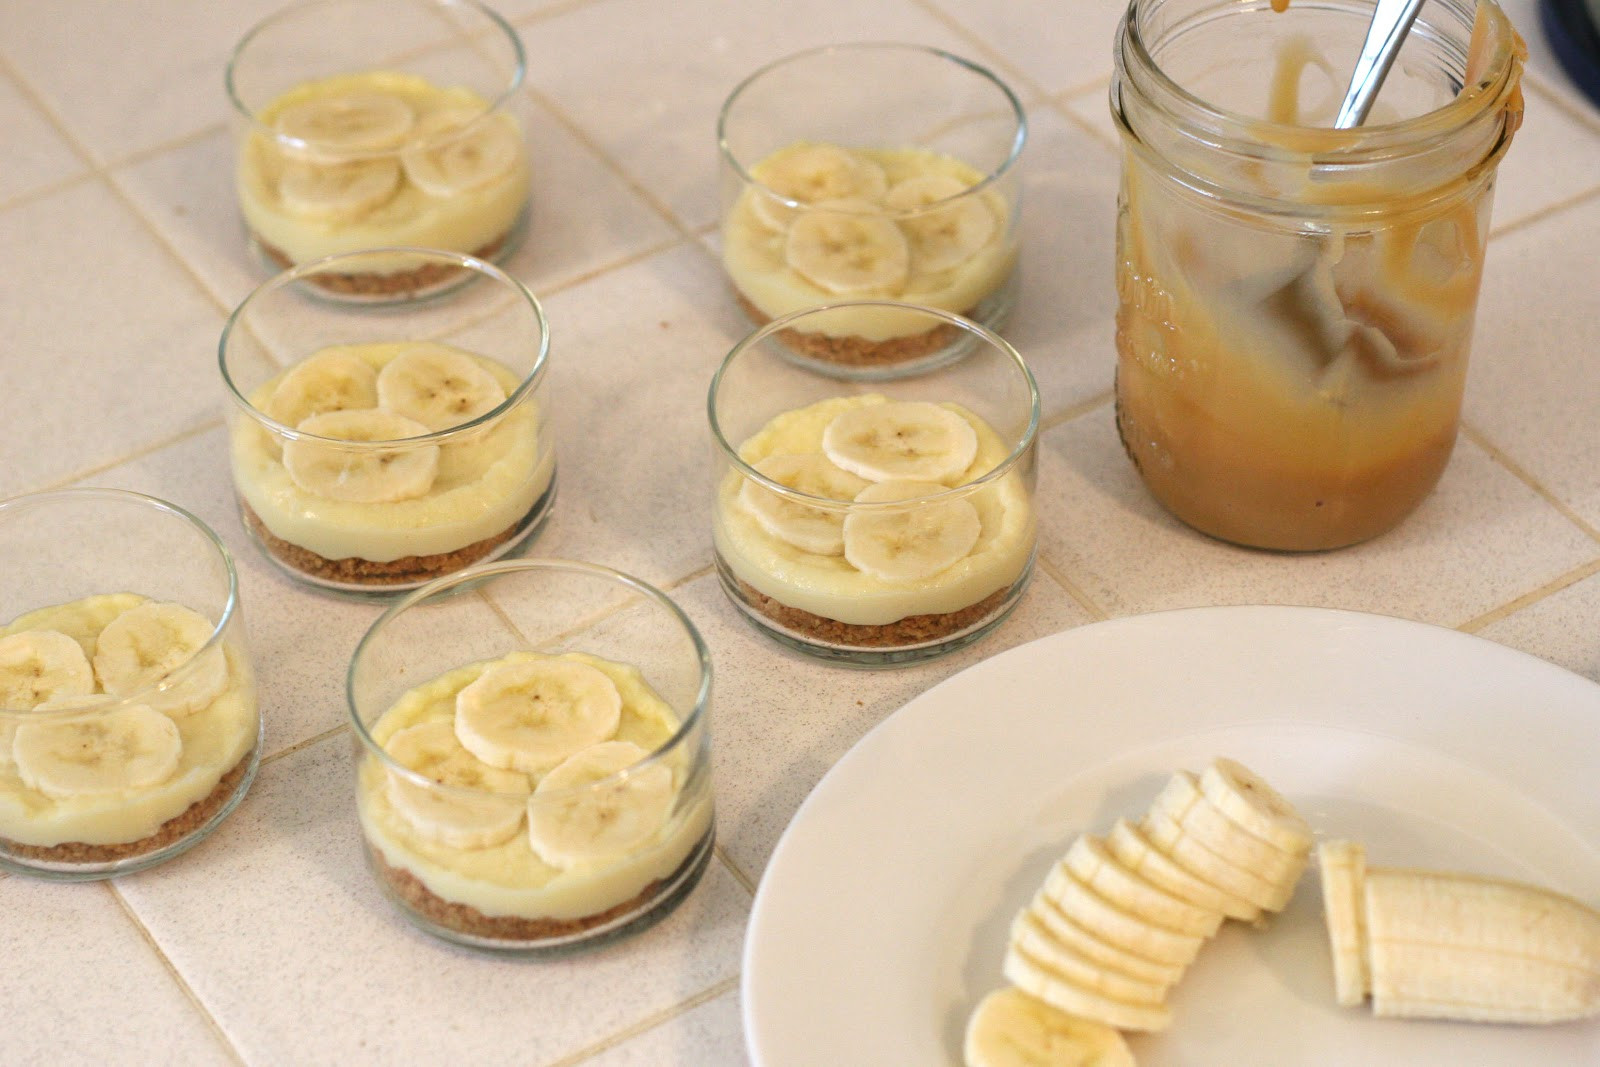 Desserts With Bananas
 Banana Caramel Cream Dessert – Glorious Treats